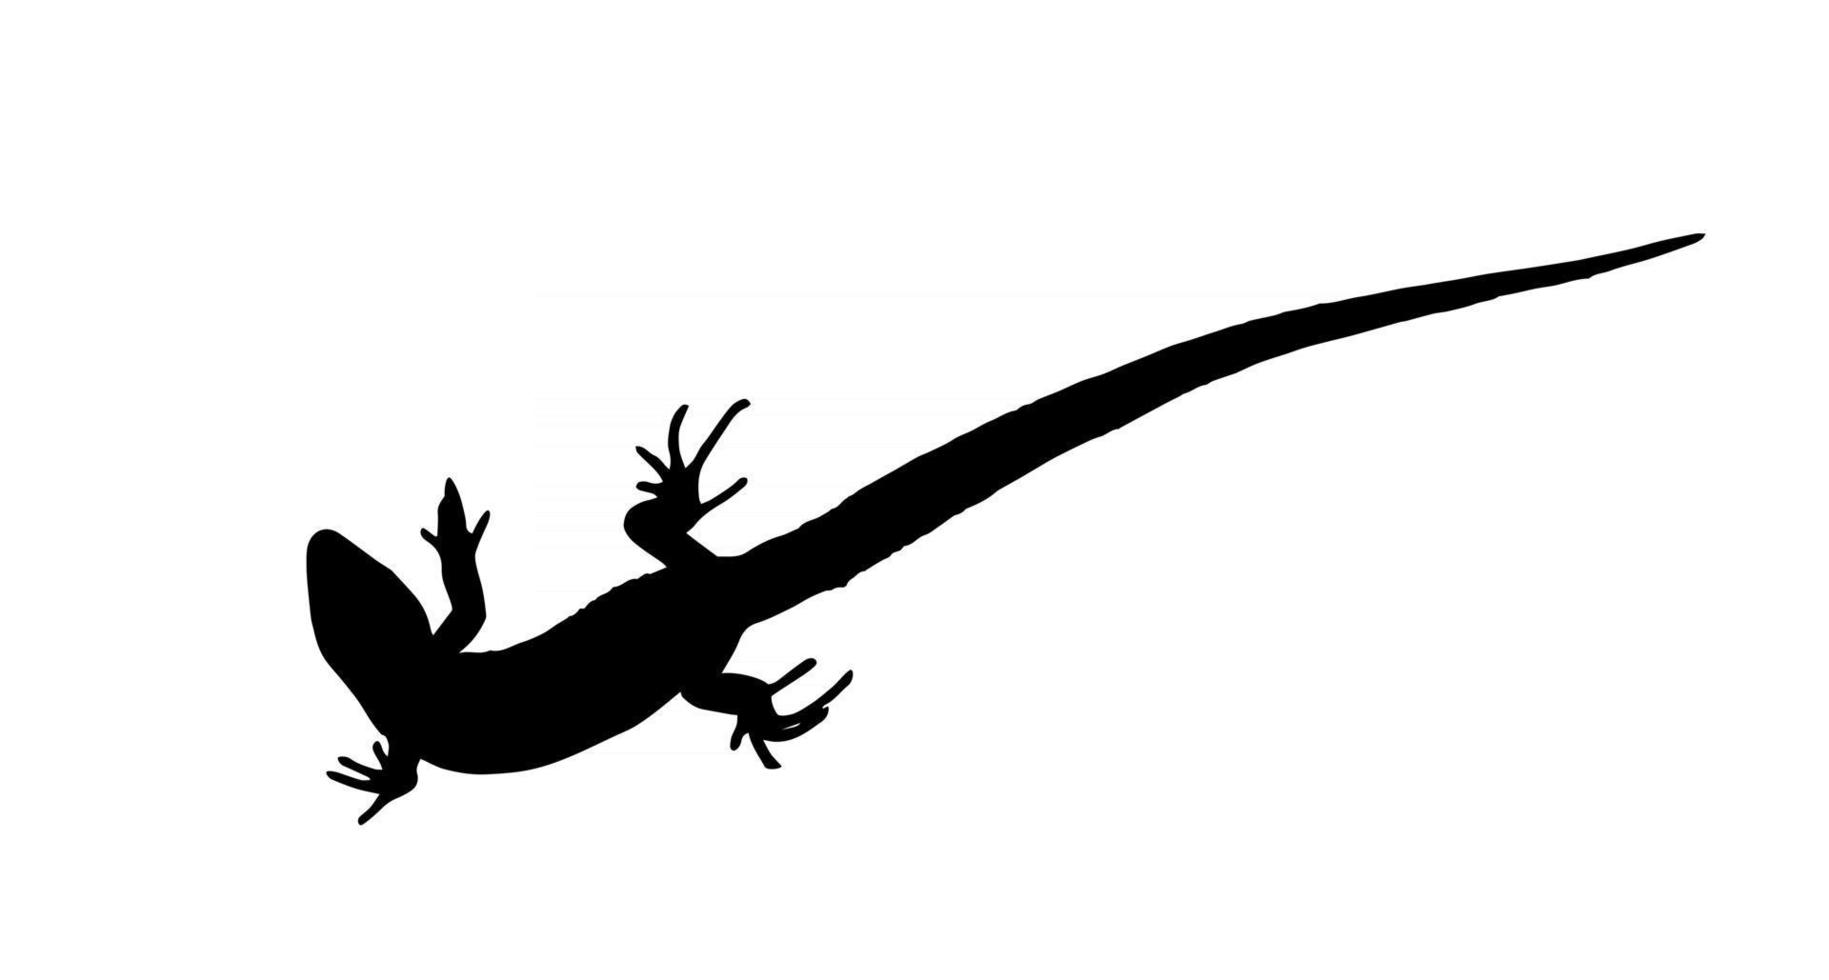 silueta de un lagarto que se arrastra. ilustración vectorial. vector